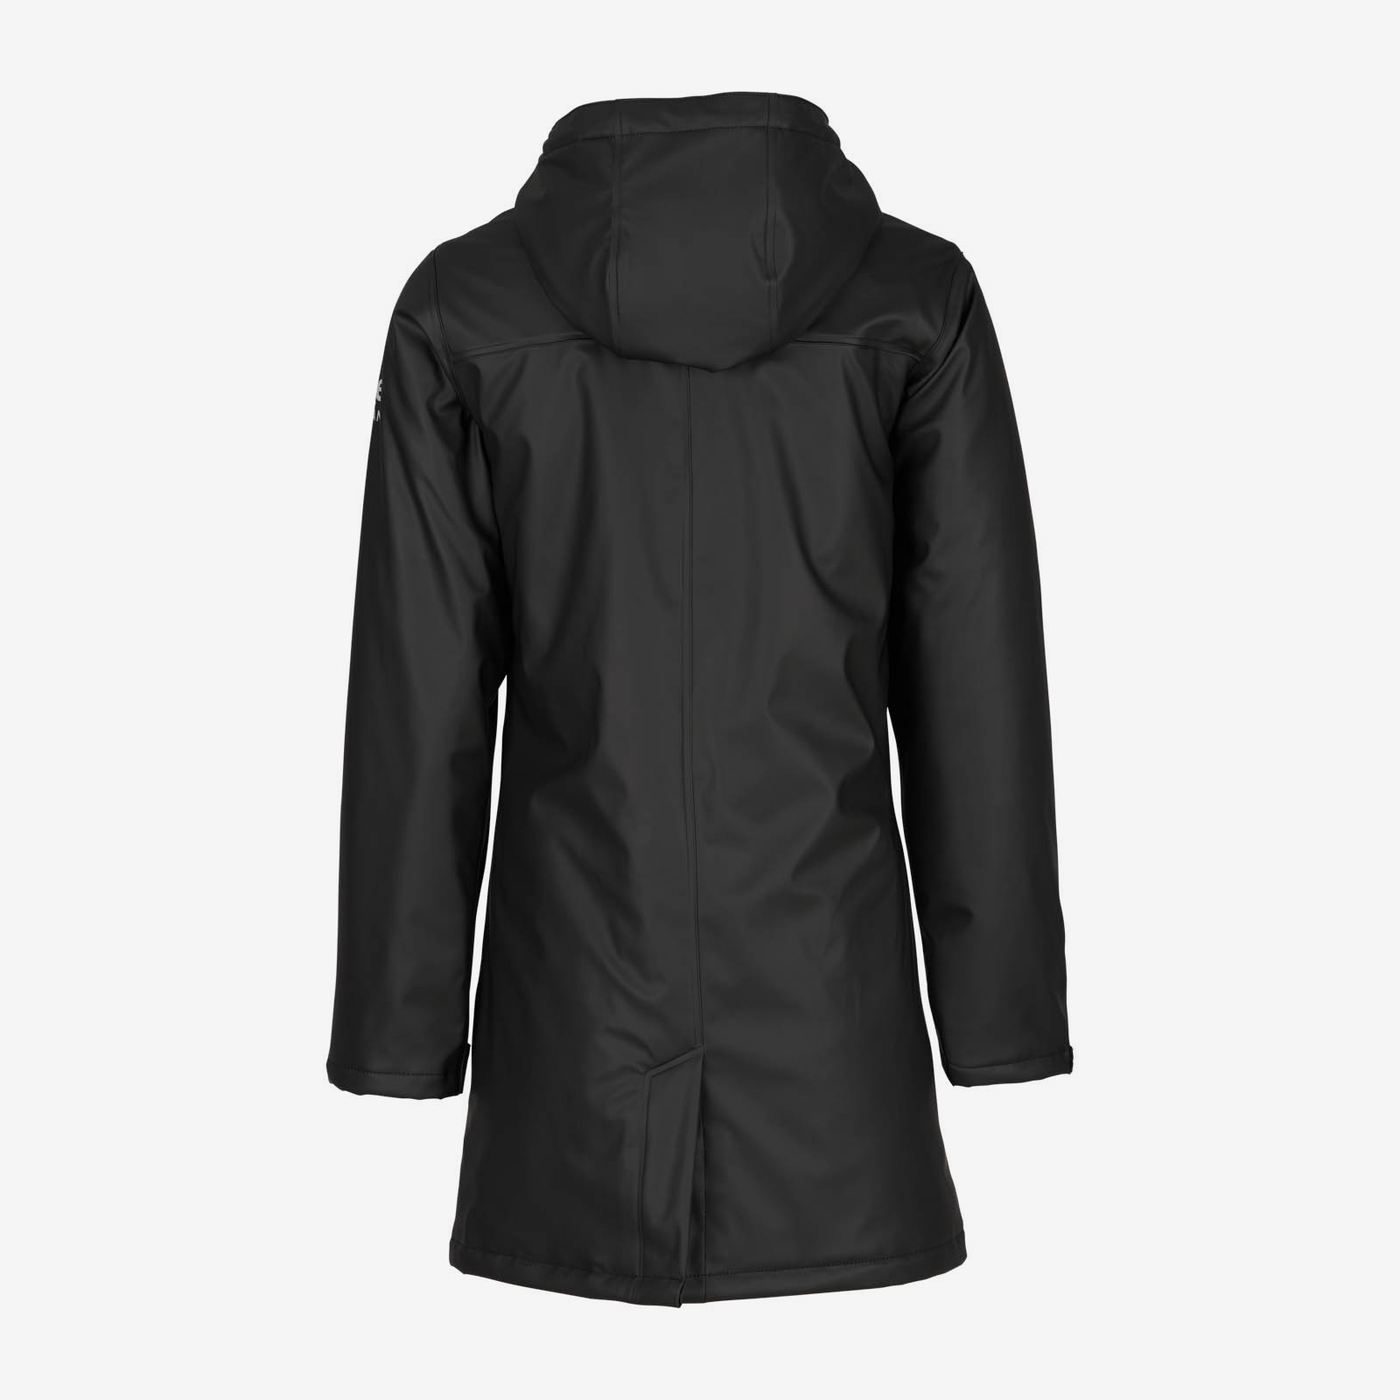 Horze Billie Women's PU Raincoat with Fleece - Black